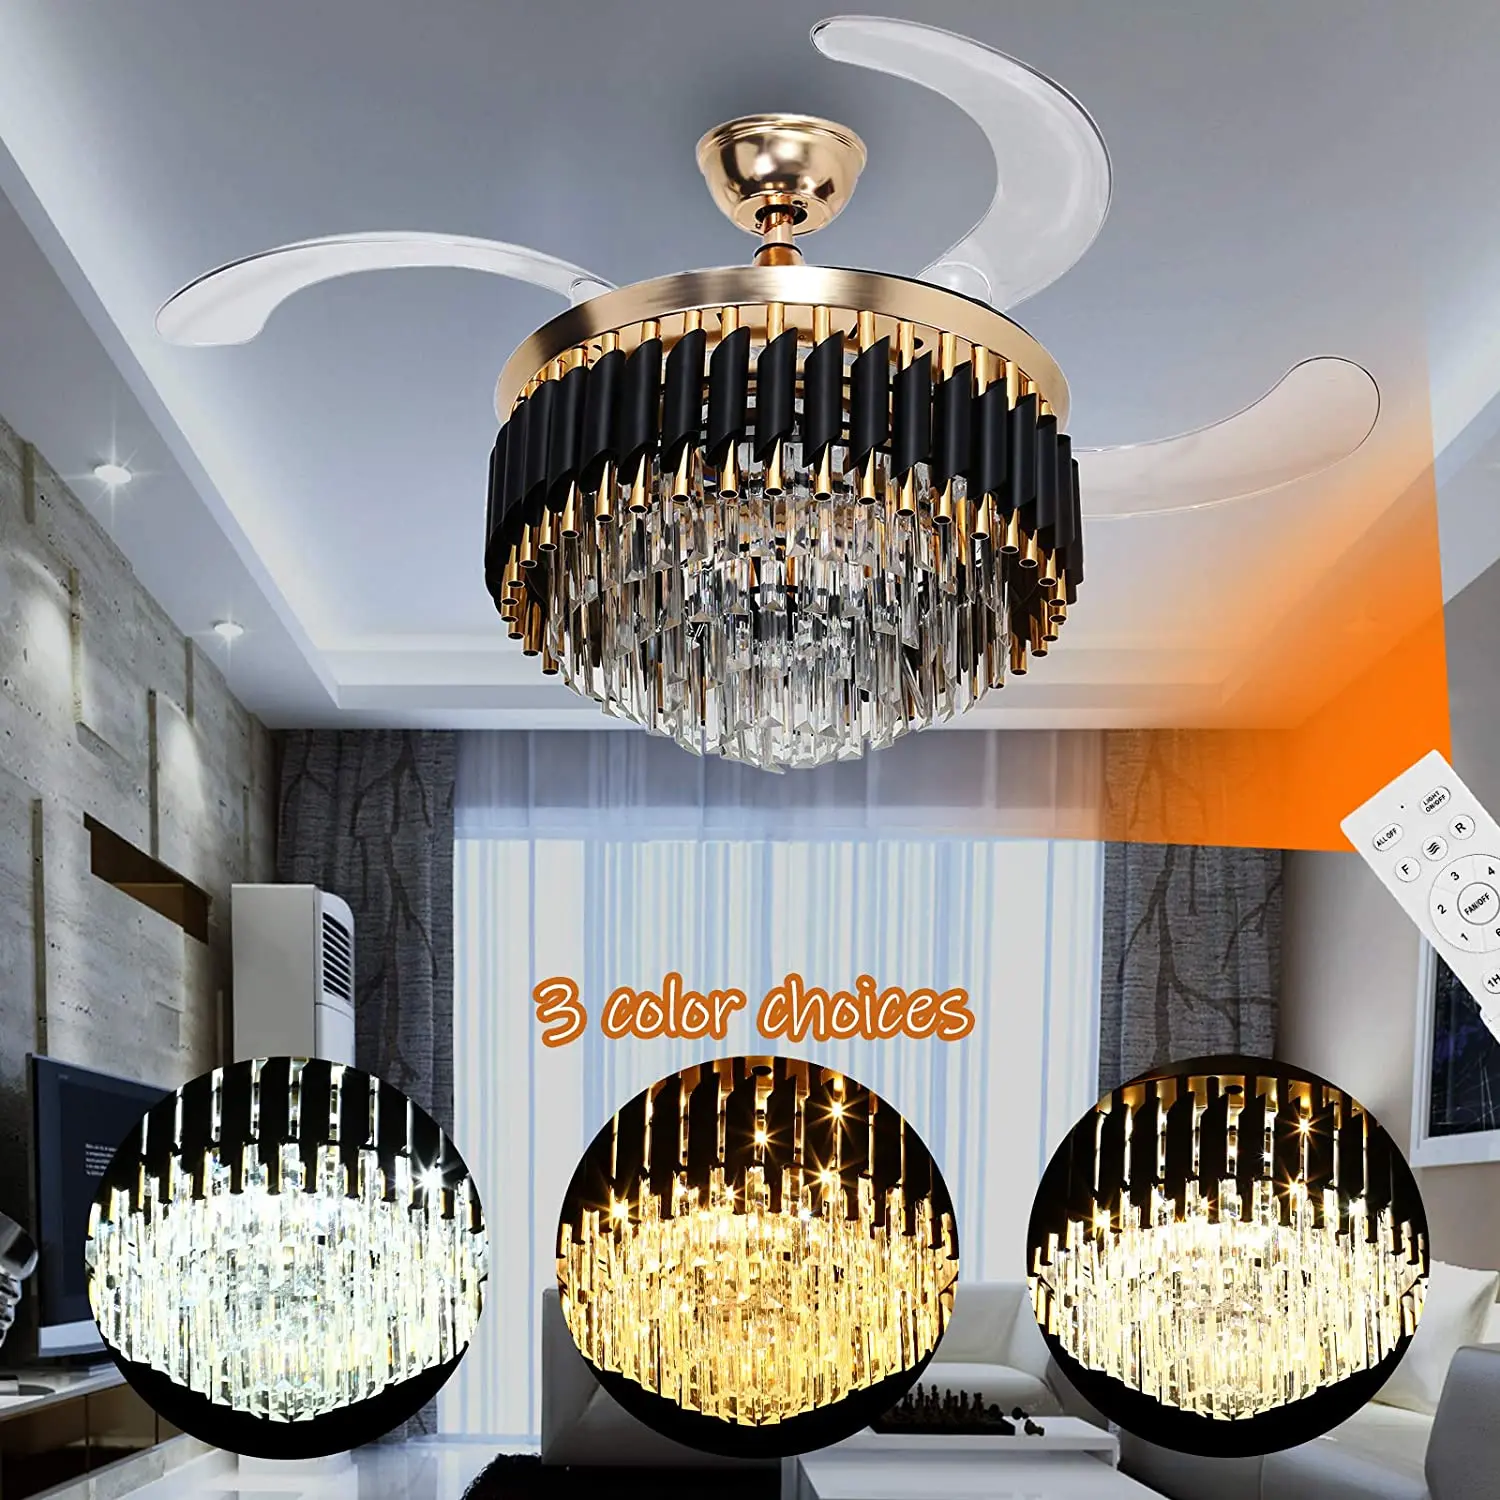 Купи Ridgeyard 42" Crystal Ceiling Lamp Fan Light LED 3 Color Setting Chandelier with 4 Invisible Retractable Blades Remote Control за 8,975 рублей в магазине AliExpress